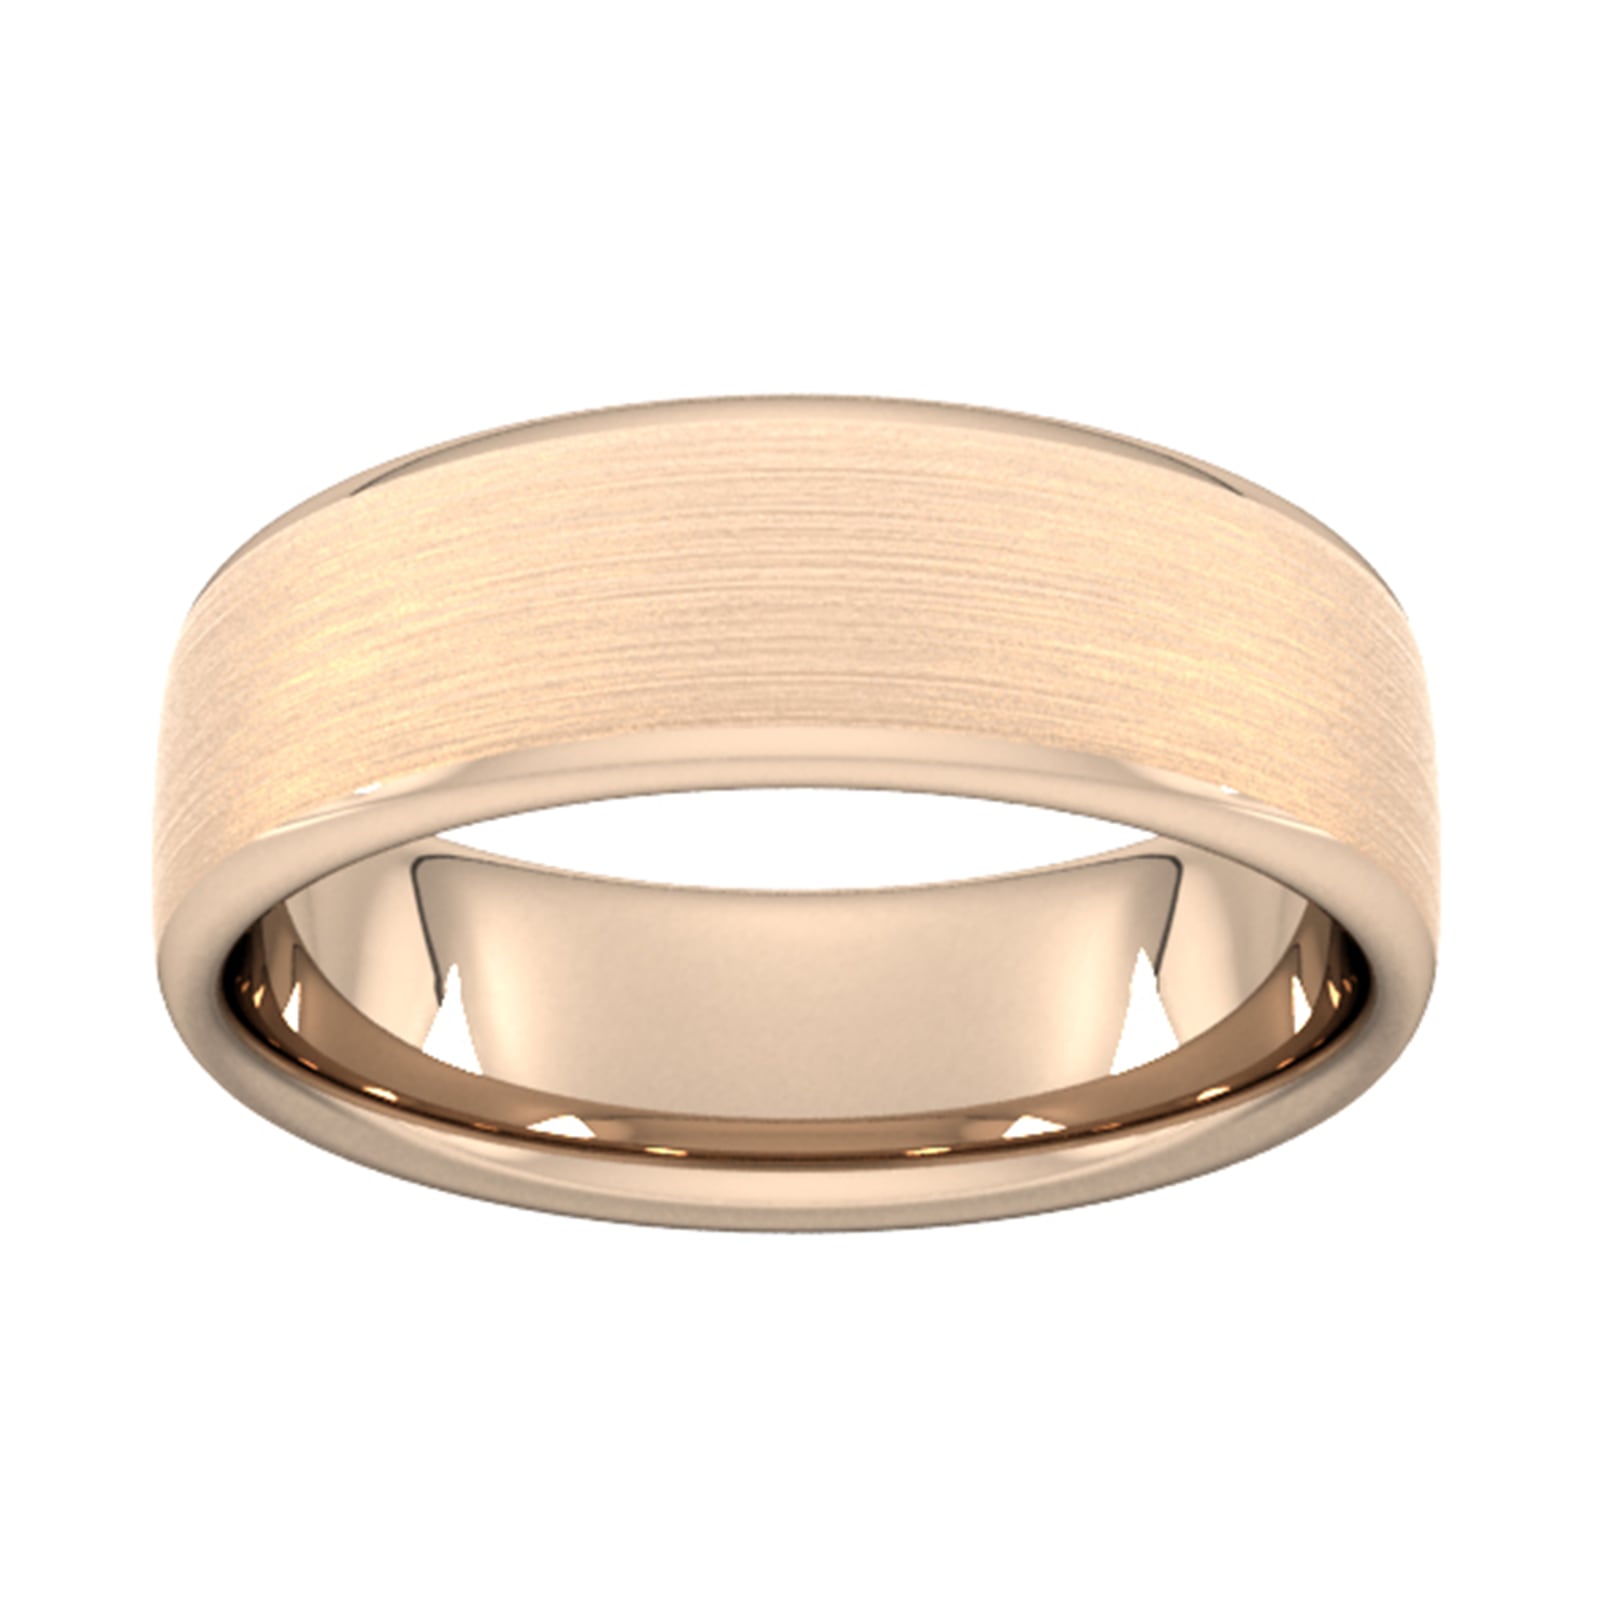 7mm D Shape Heavy Matt Finished Wedding Ring In 18 Carat Rose Gold - Ring Size J